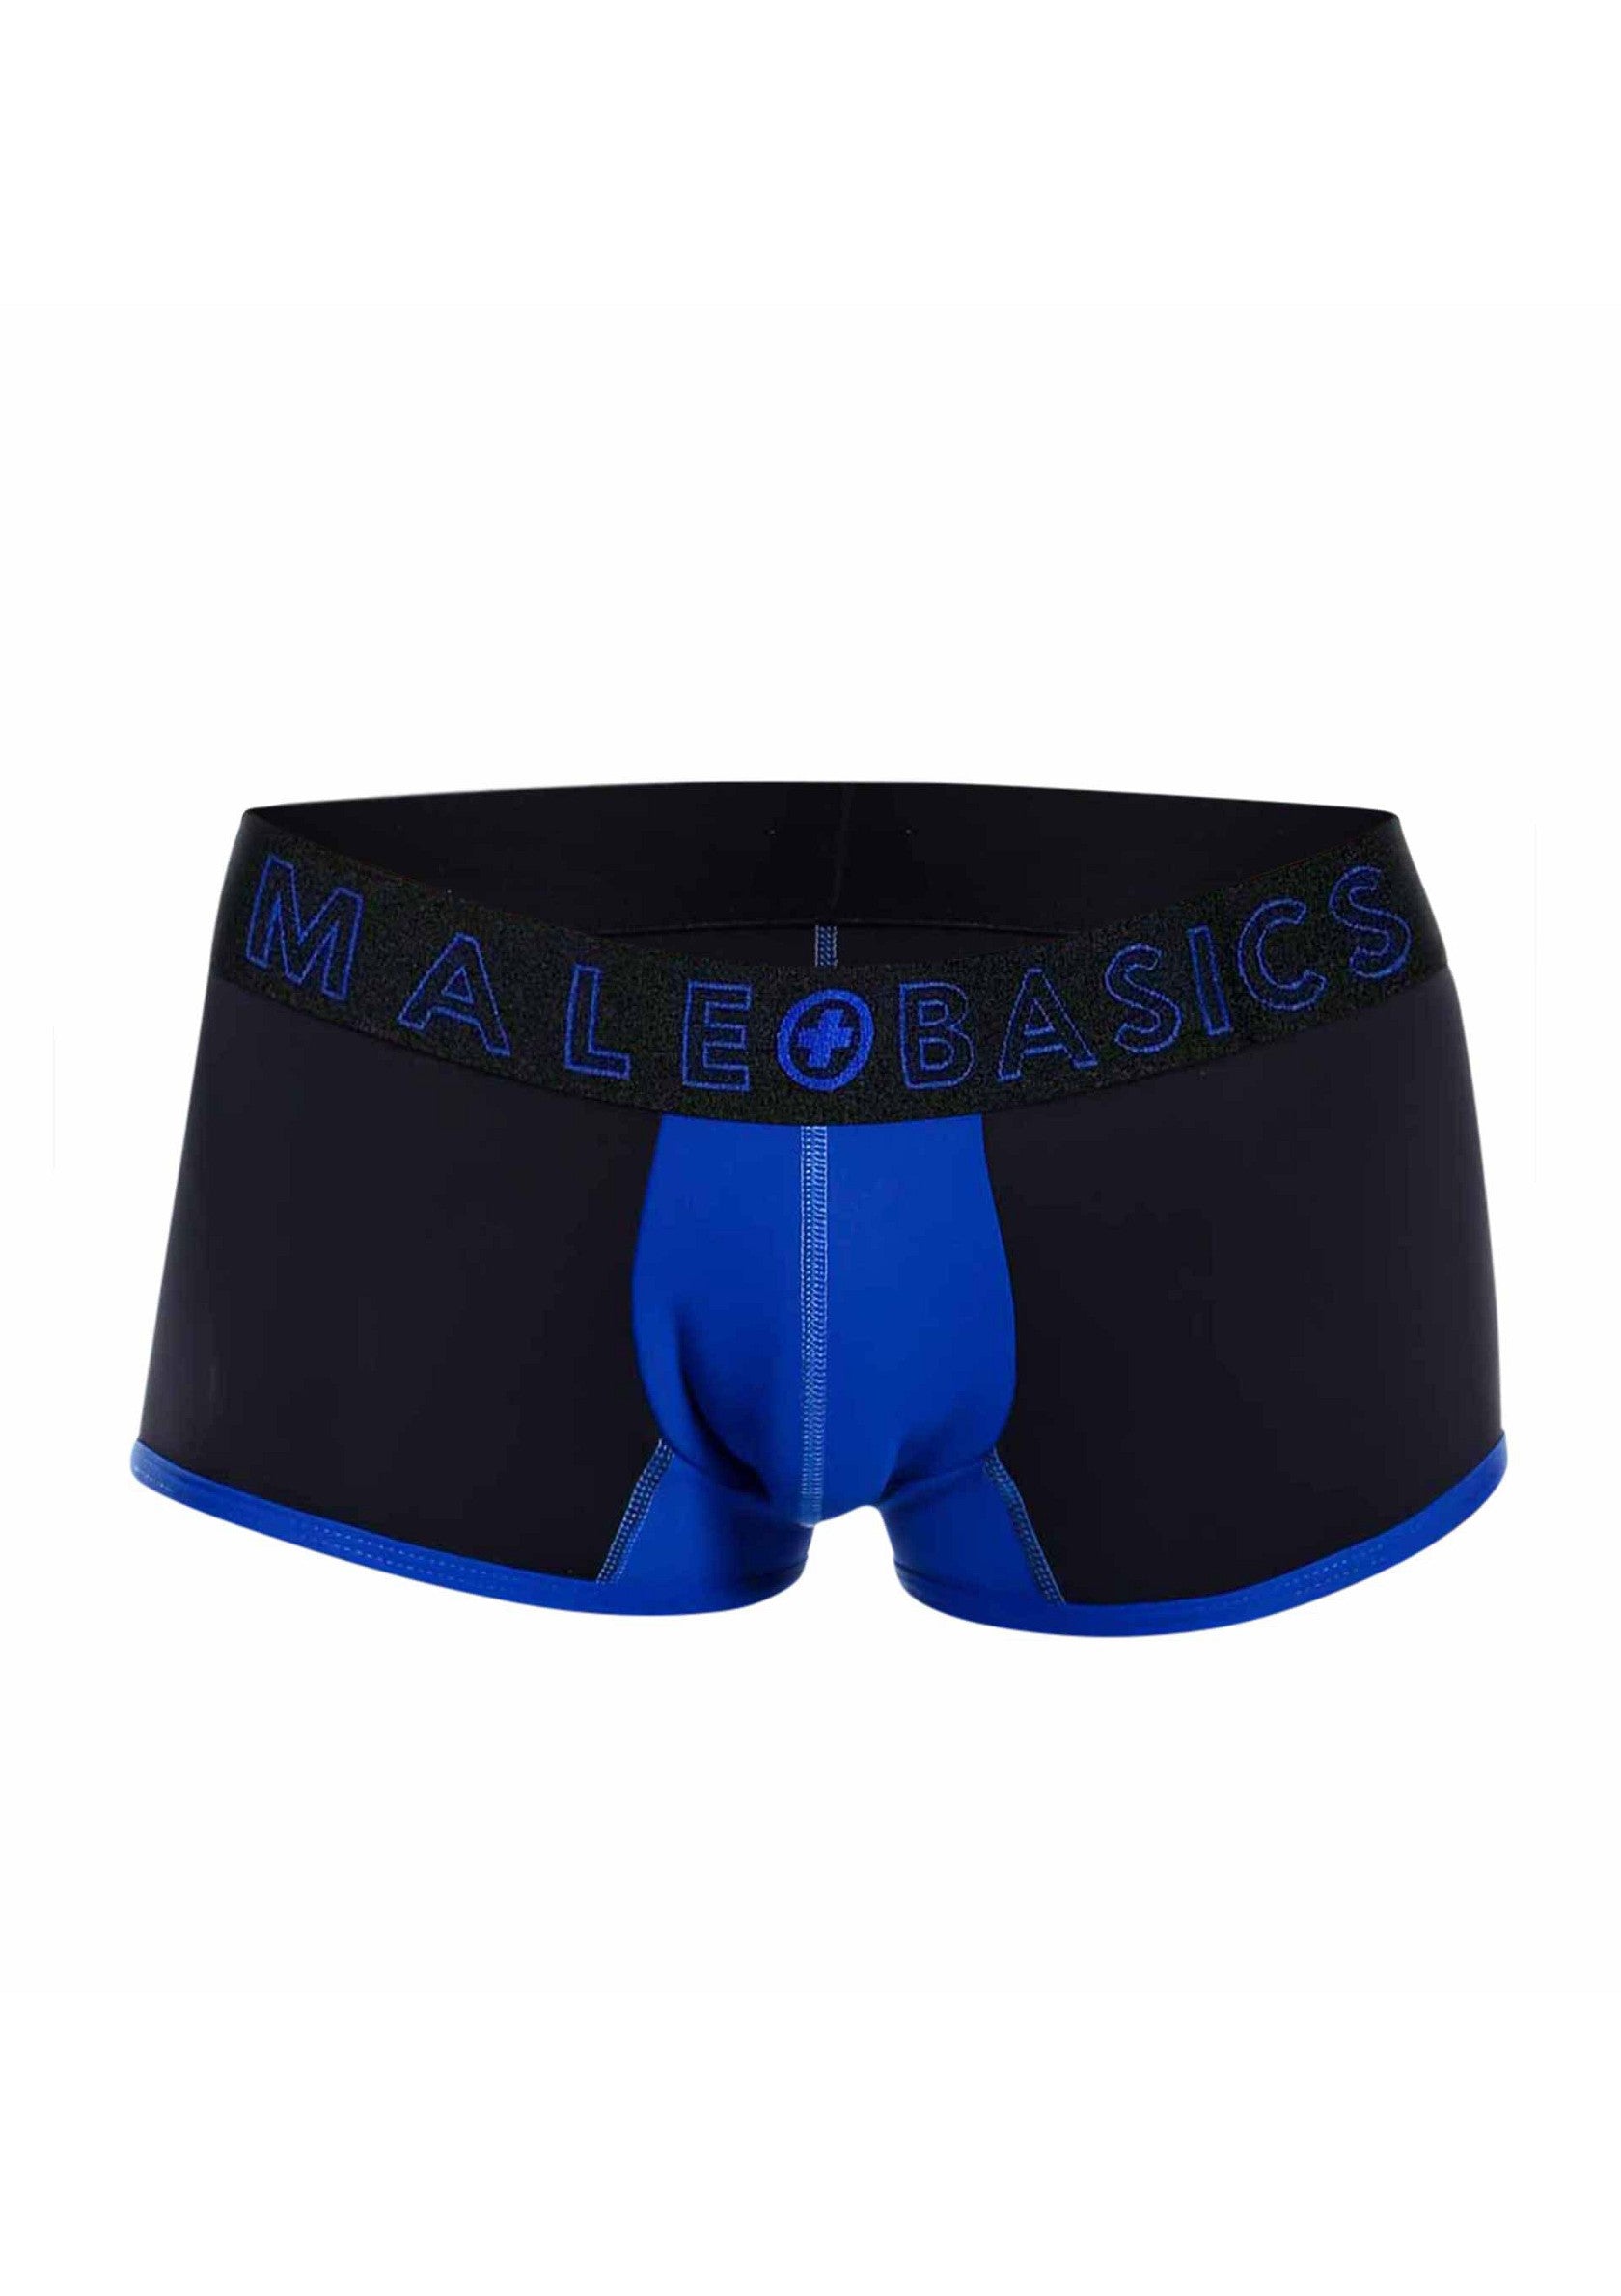 MaleBasics Neon Trunk BLUE S - 0